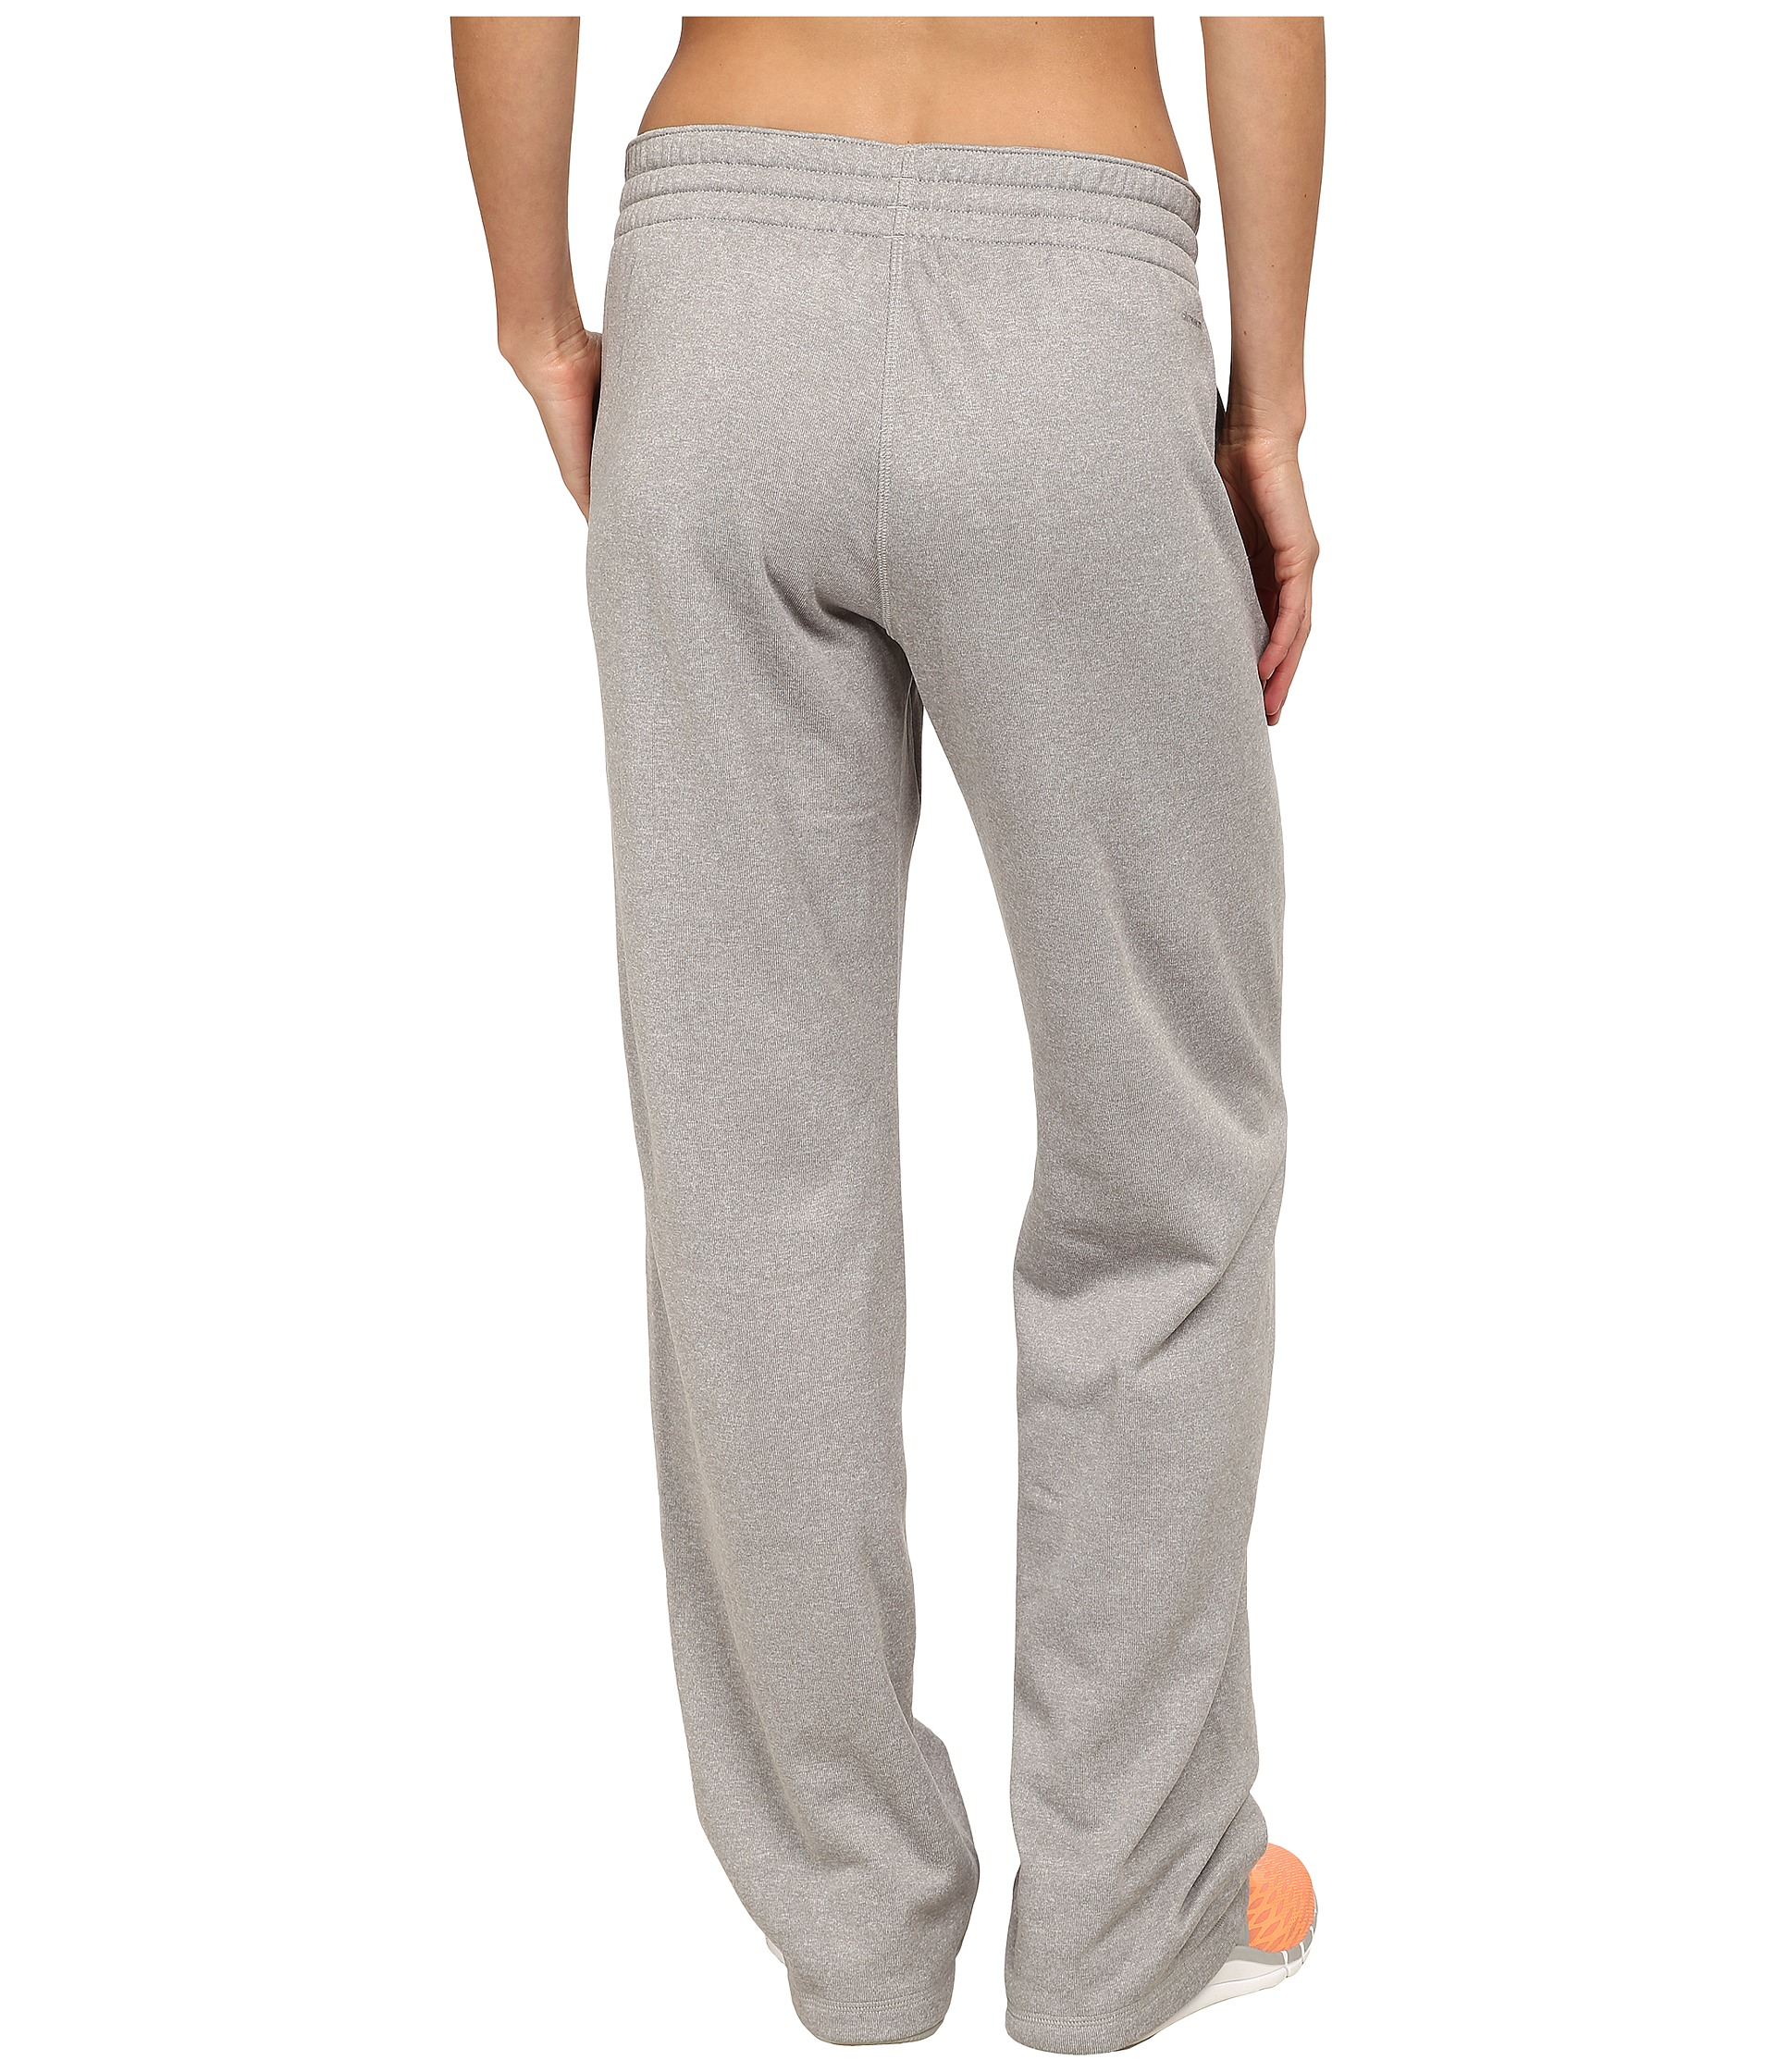 Lyst - Adidas Ultimate Fleece Pants in Gray